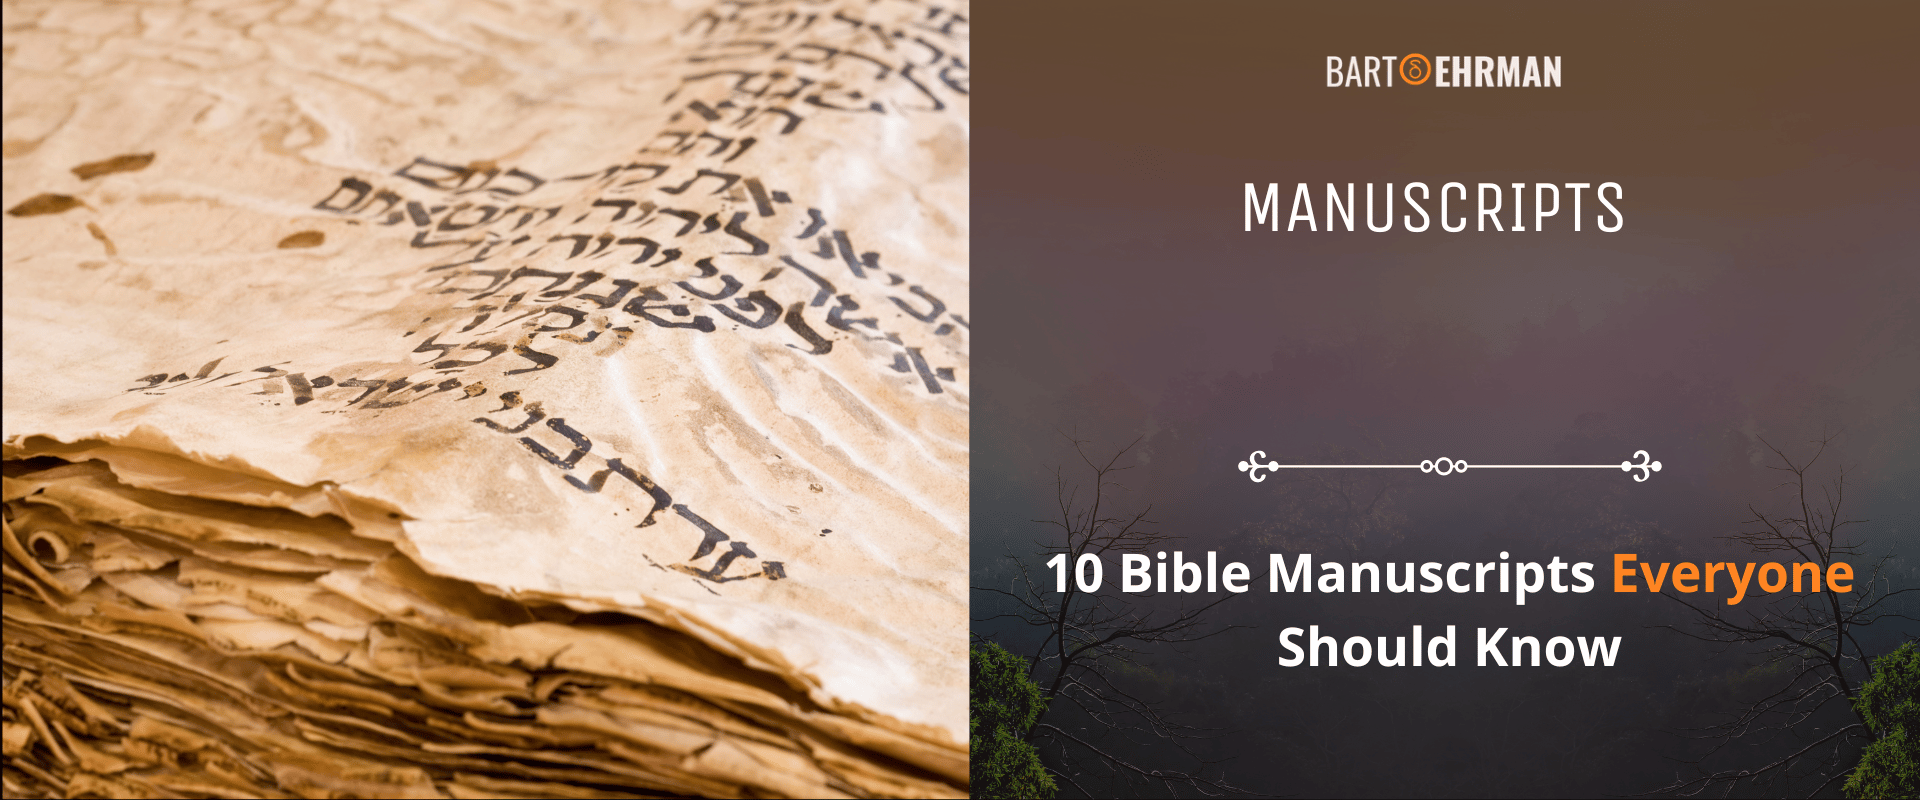 10 Bible Manuscripts Everyone Should Know